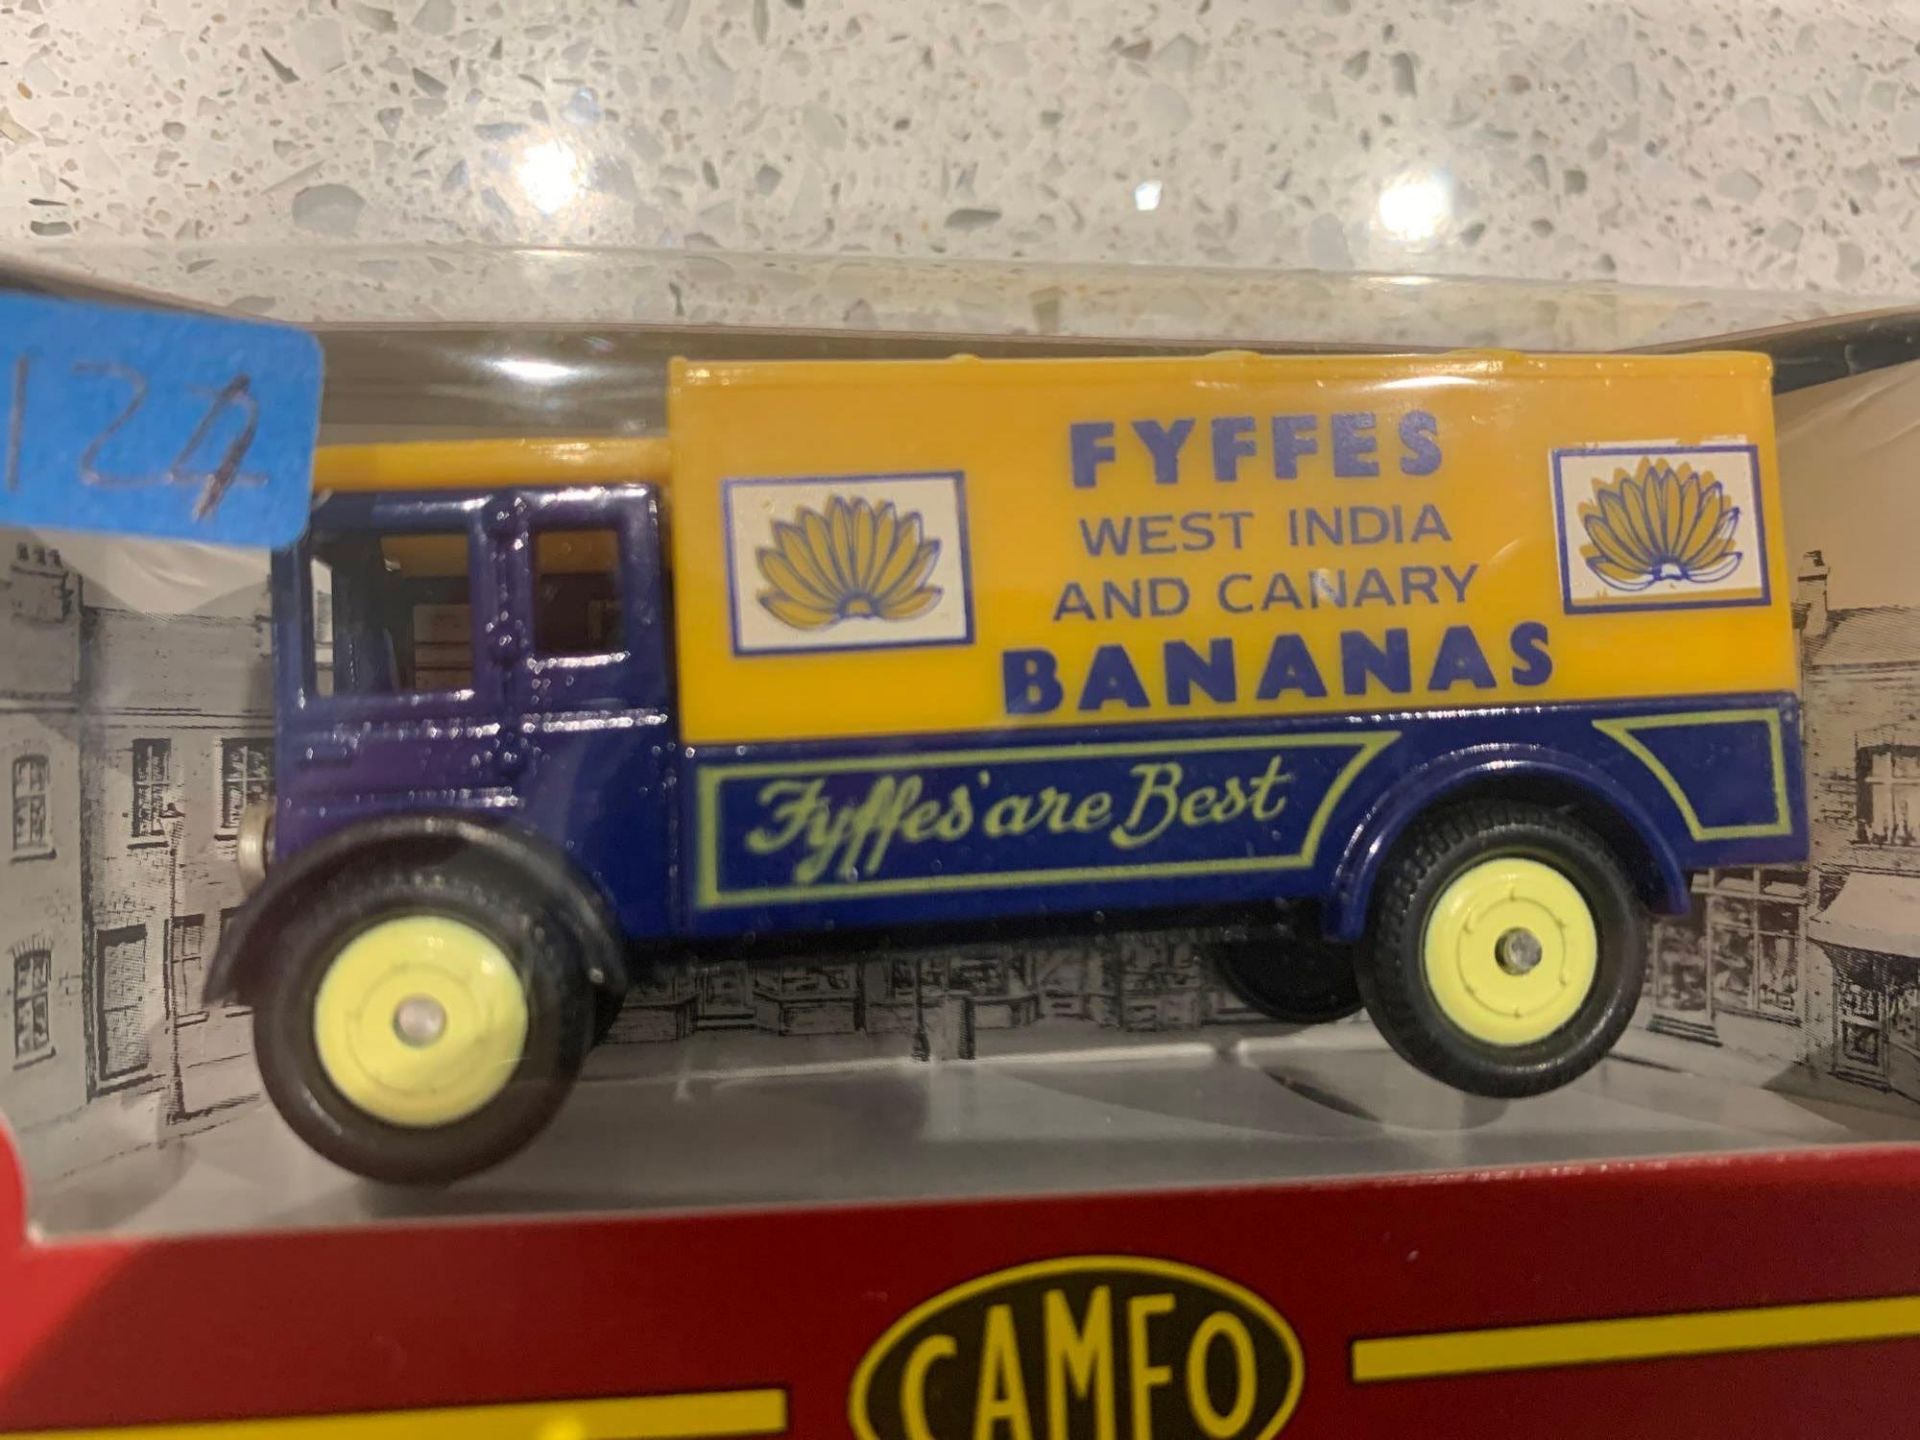 4 X Cameo Trucks Flowers Best Bitter BOAC Gaymers Cyder FYFFES Bananas - Image 6 of 7